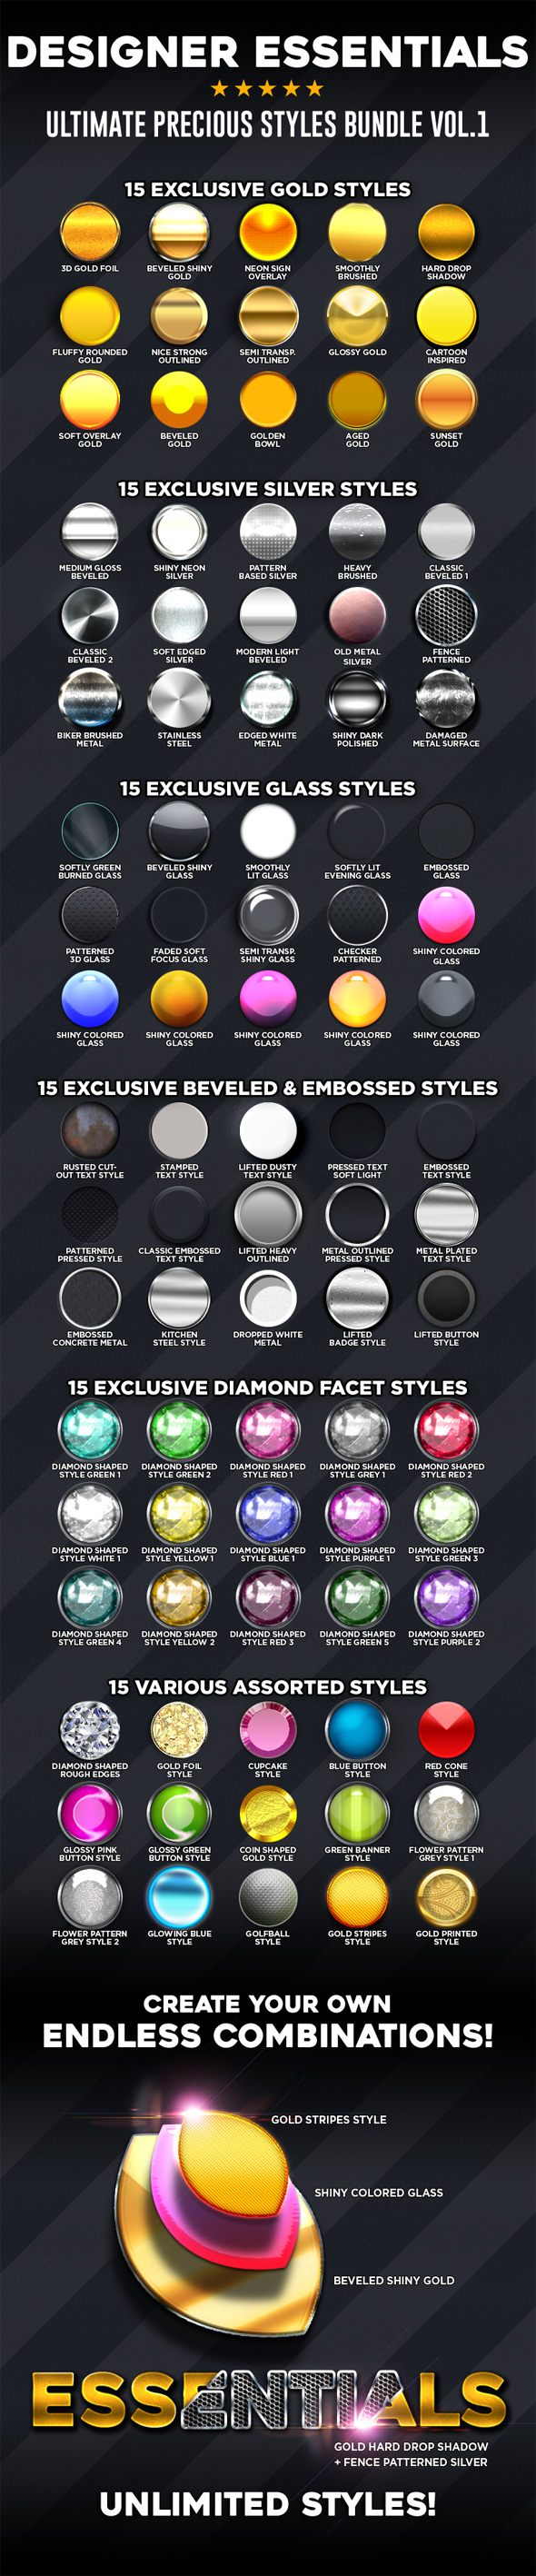 Designer Essentials Ultimate Precious Styles Bundle Vol.1